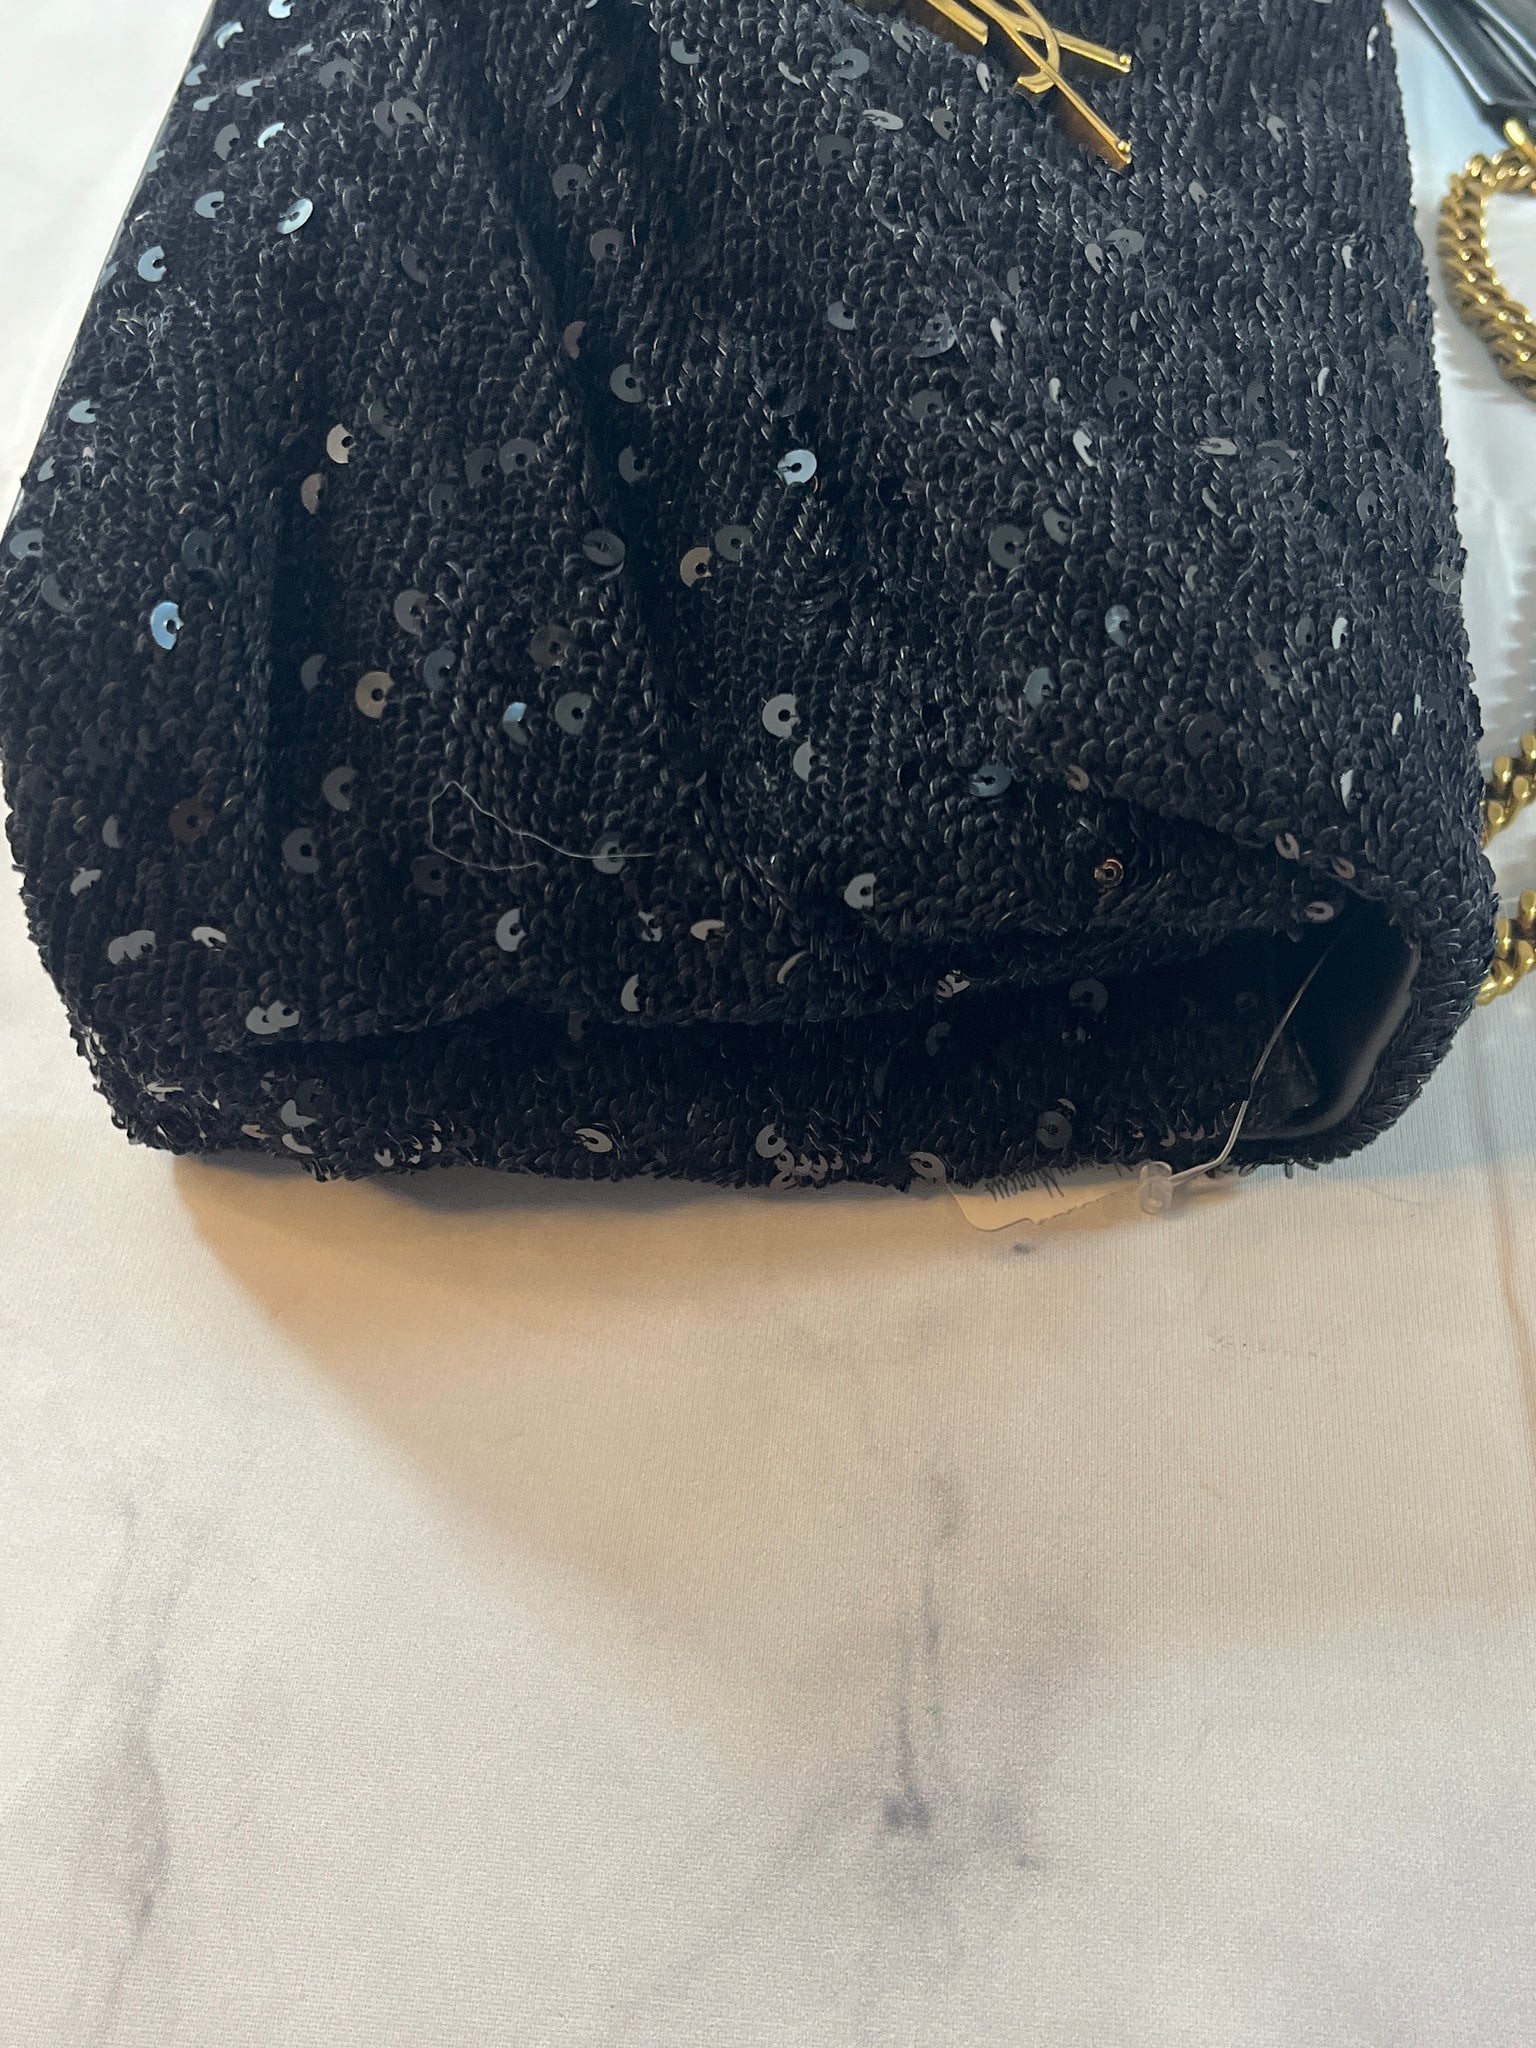 Saint Laurent YSL Small Puffer Sequin Clutch Bag